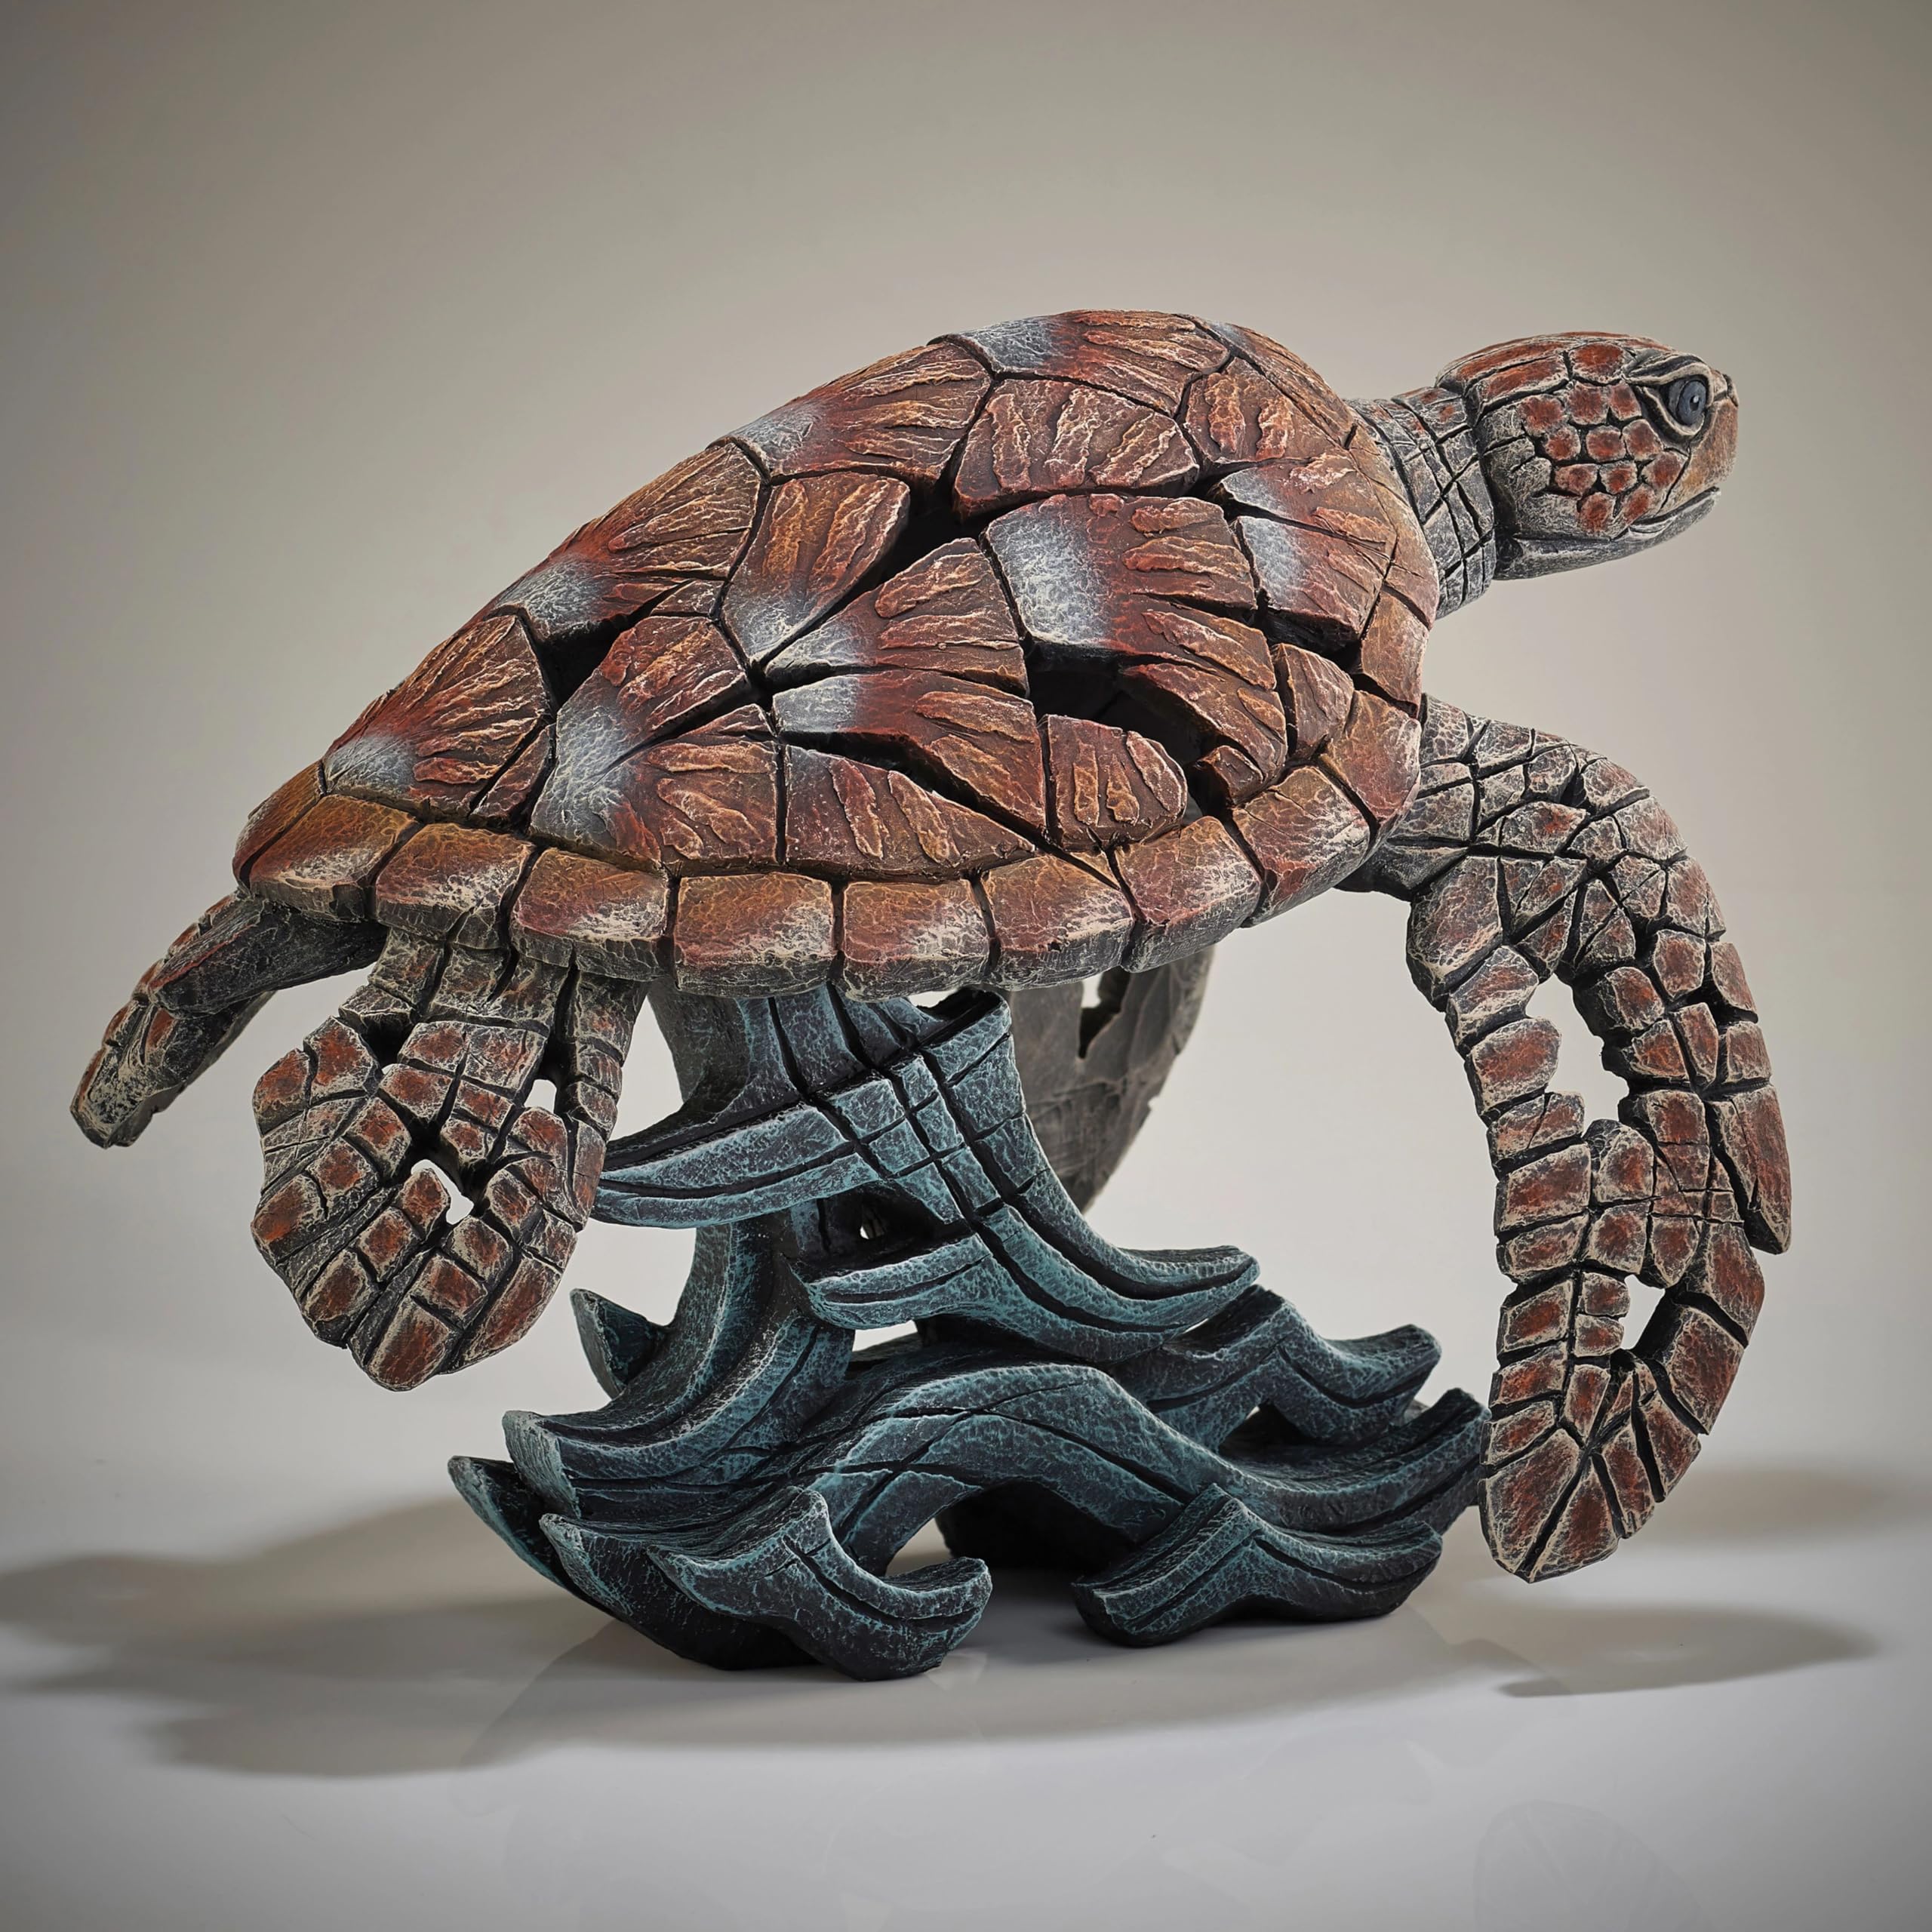 Enesco Edge Sculpture Sea Turtle on Wave Animal Figurine, 13.19 Inch, Brown and Blue